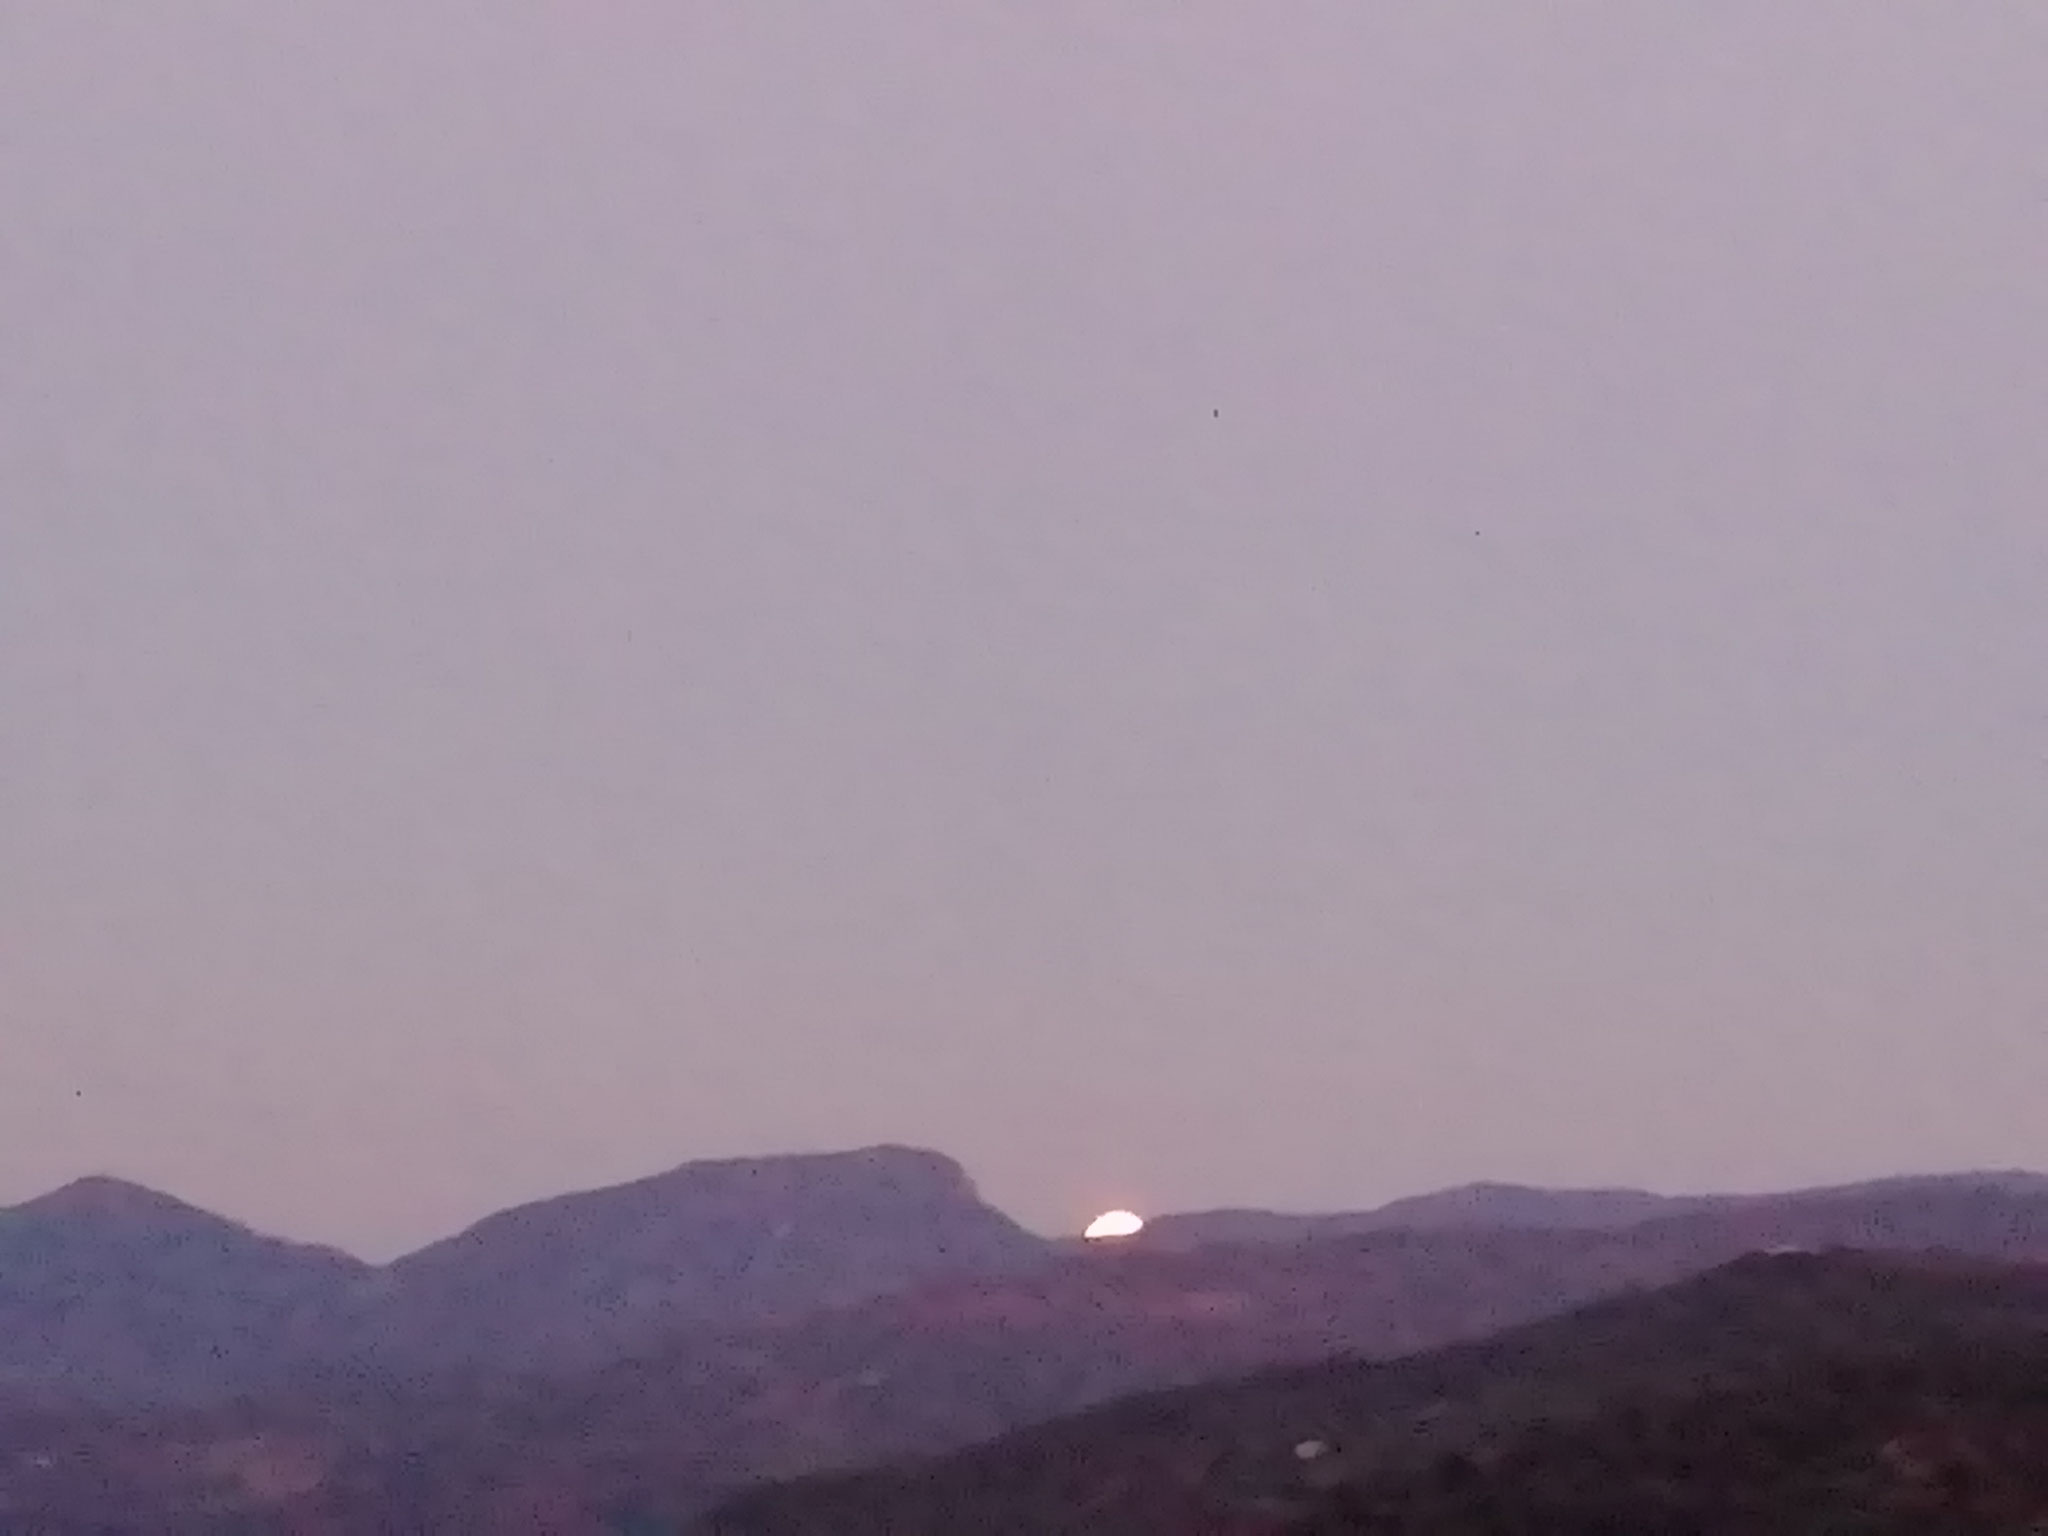 Mond-Untergang am frühen Morgen!